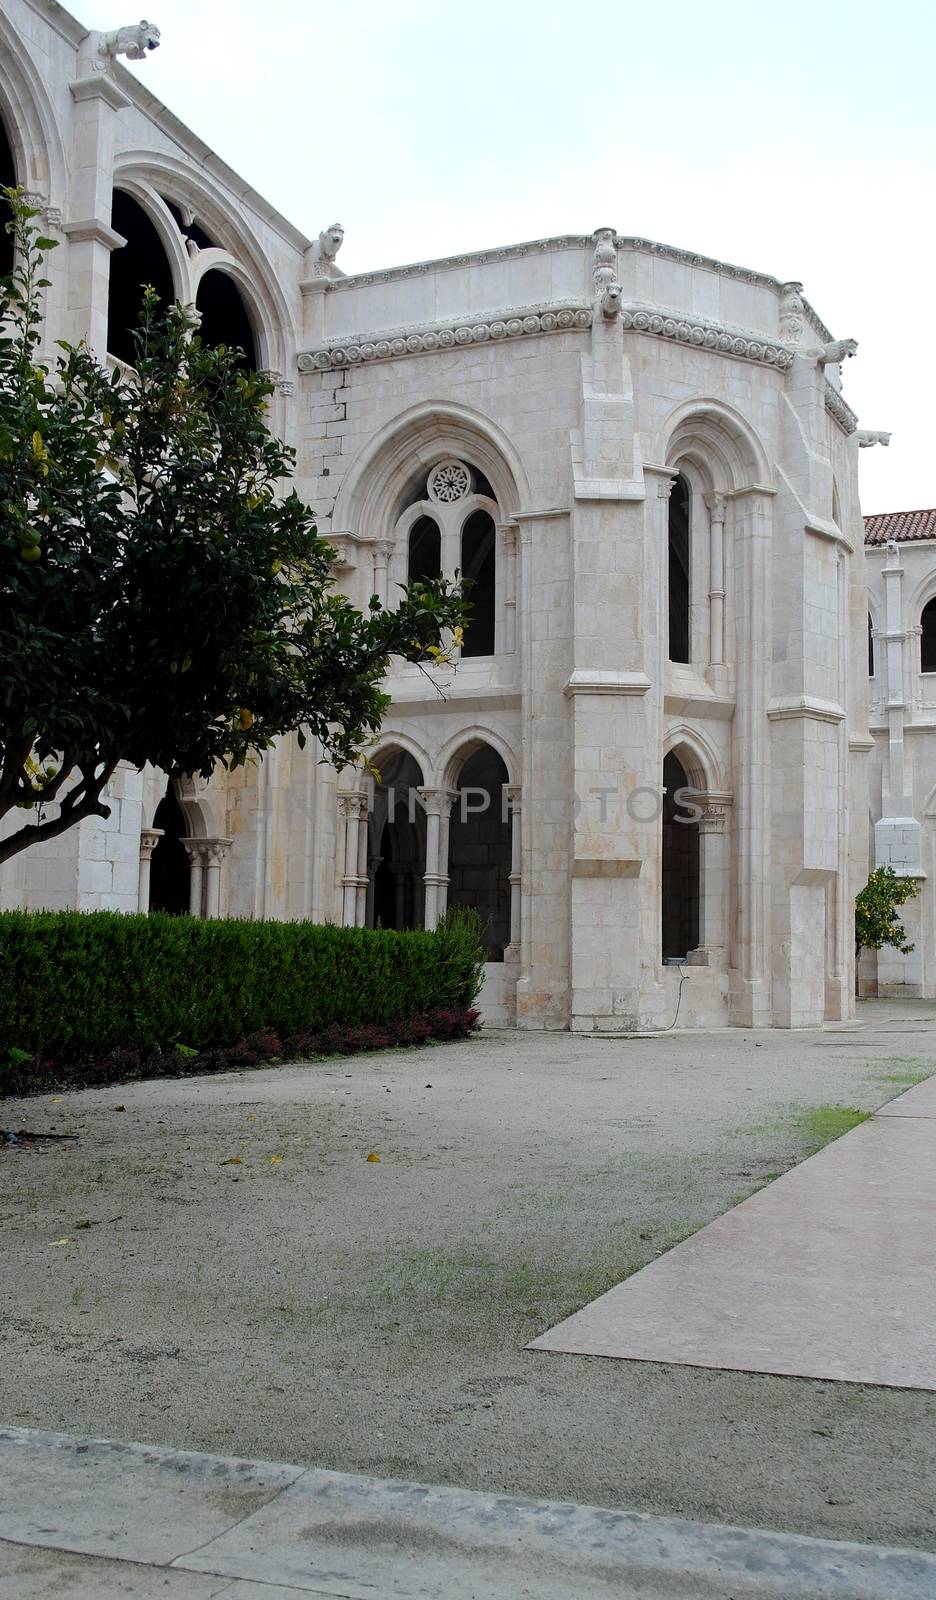 Monastery of Alcobaca, Alcobaca, Portugal